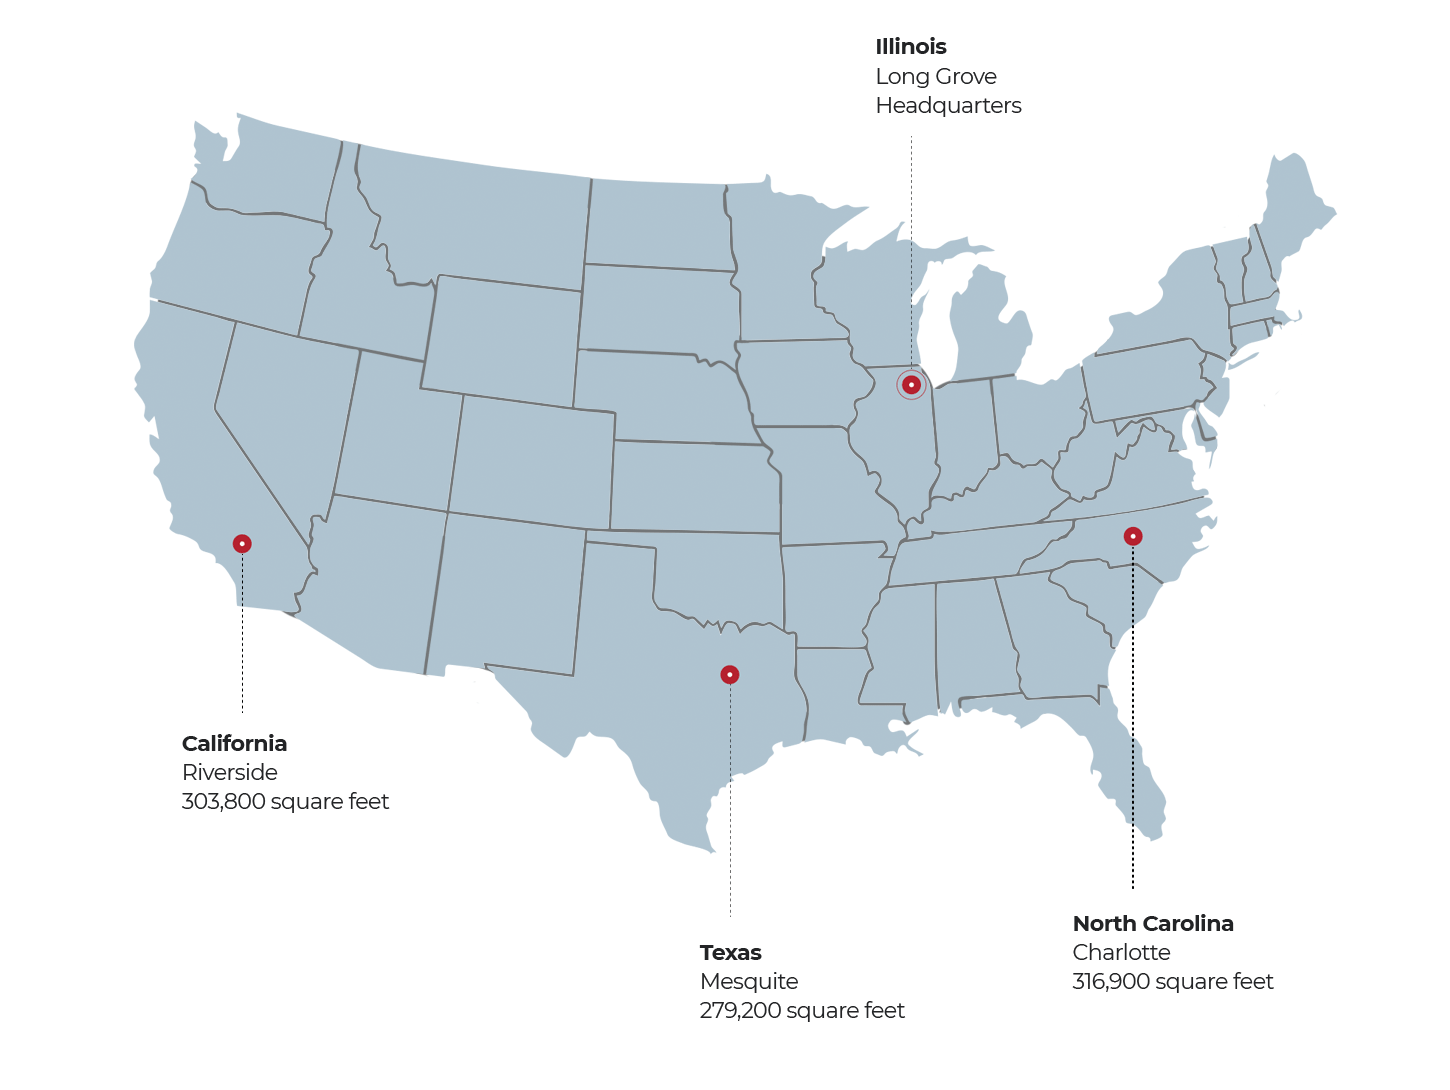 U.S Distribution Centers